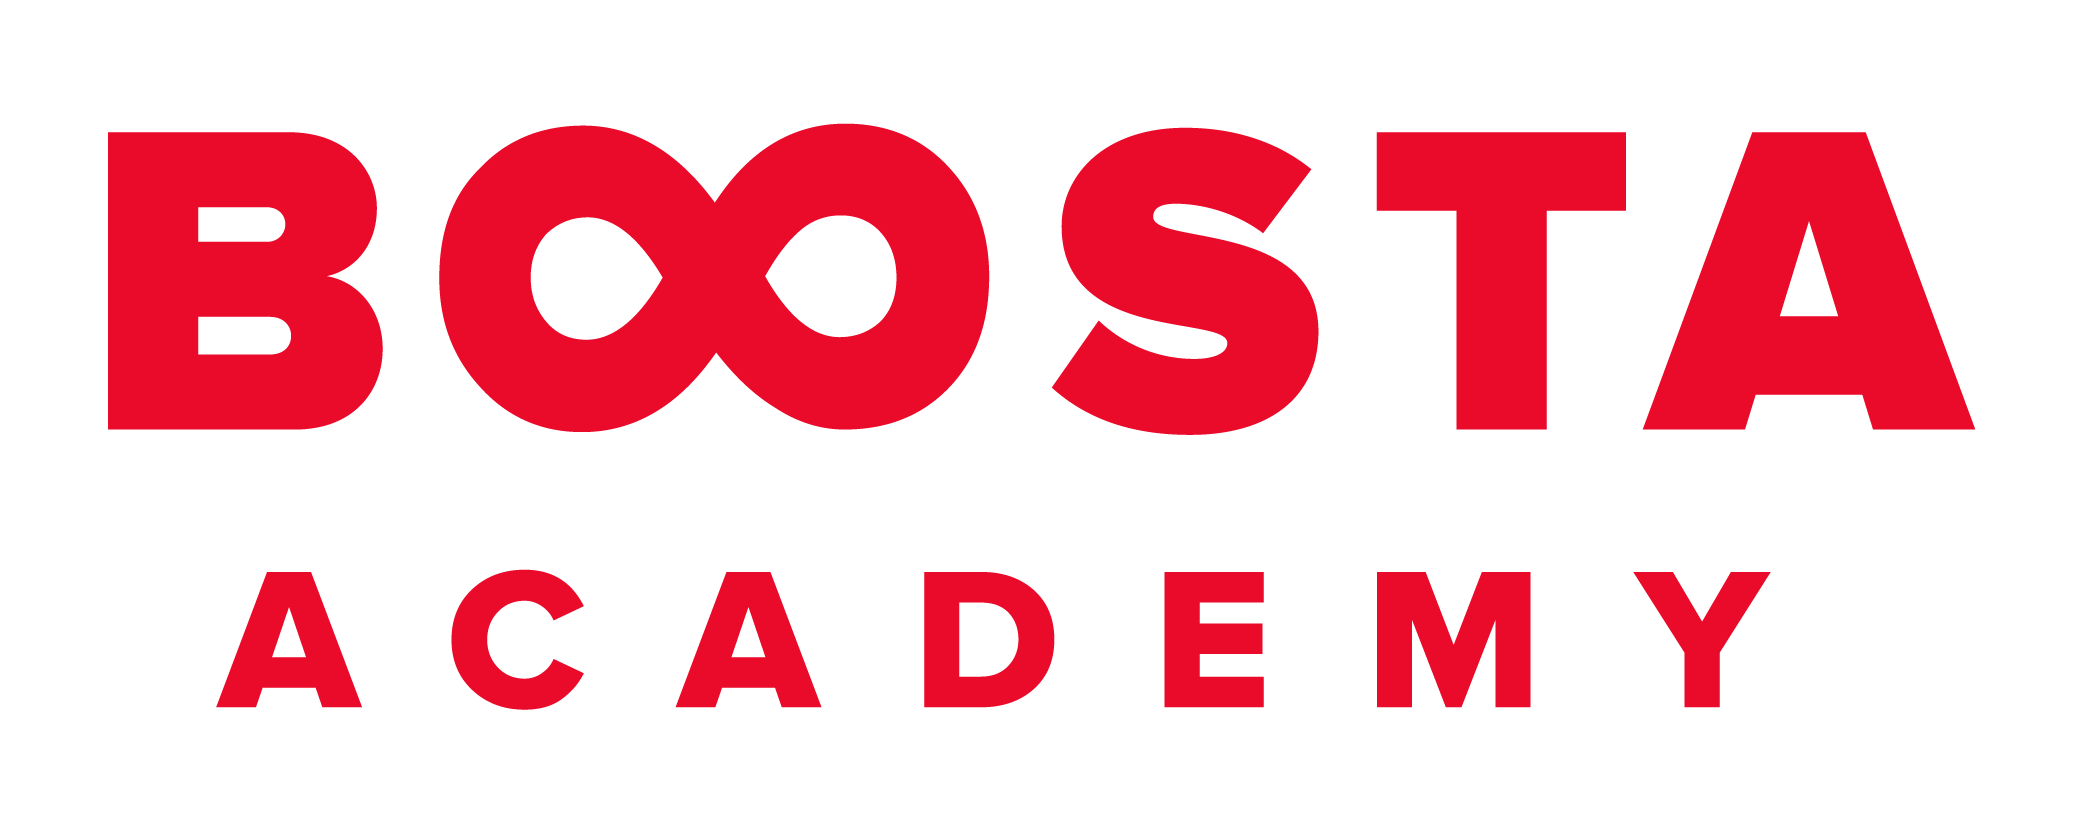 Boosta academy logo